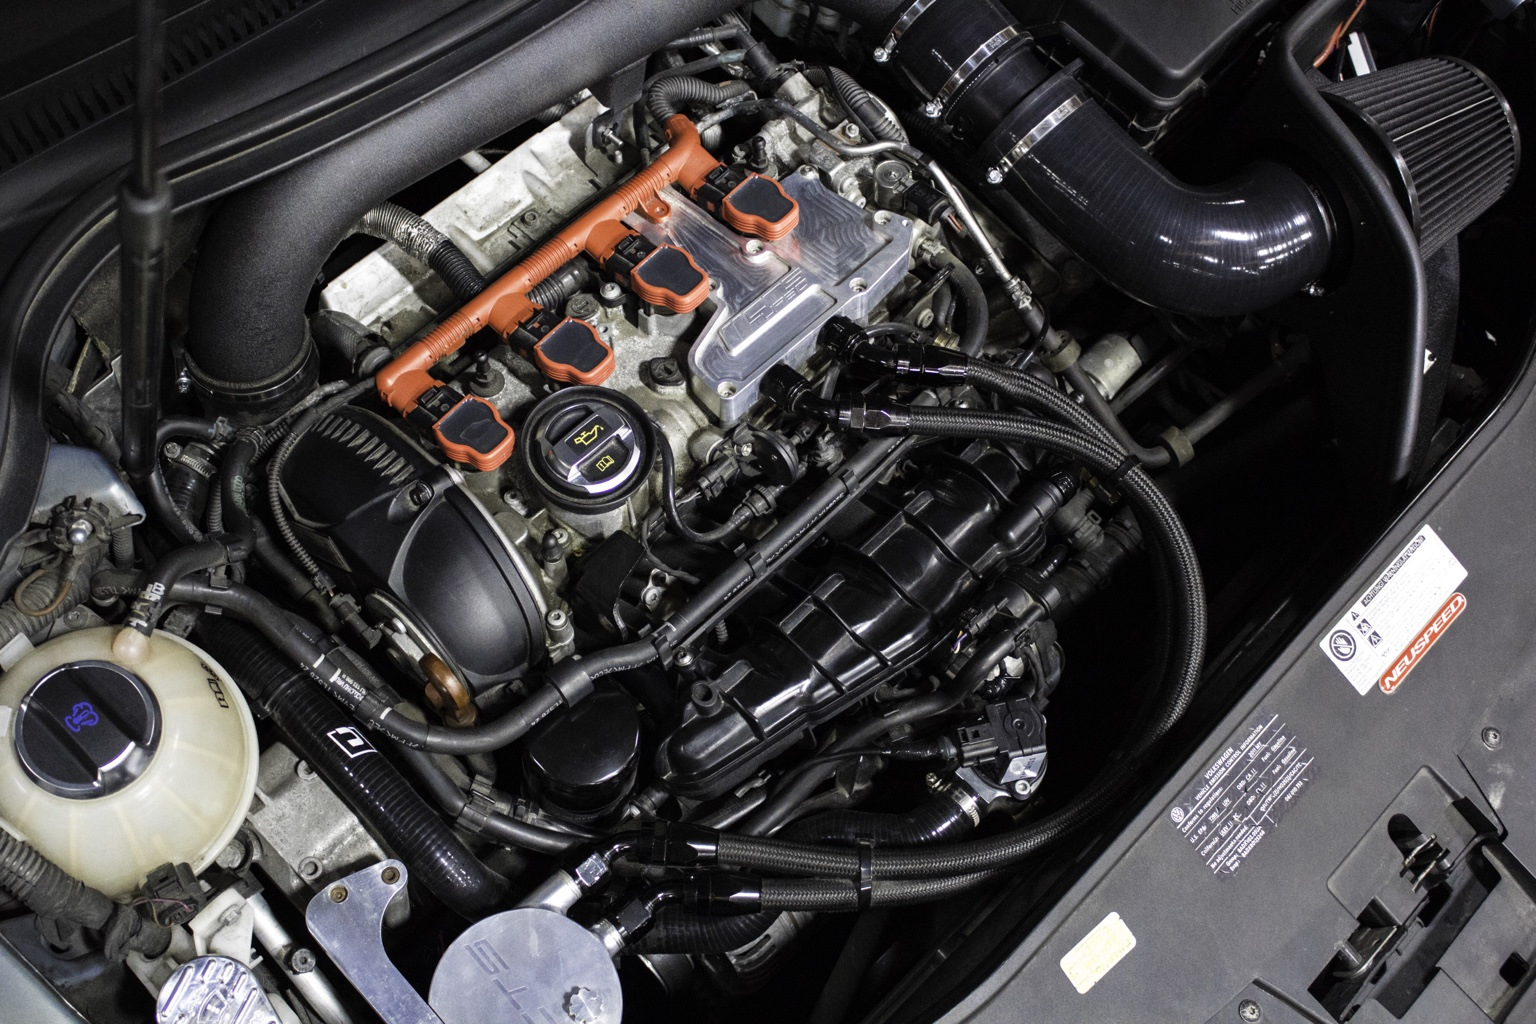 Двигатель пассат б6 1.8. Фольксваген 2.0 TSI. Двигатель VW TSI 1.8 турбо. Volkswagen Passat cc TSI мотор. Двигатель Пассат СС 1.8 турбо.